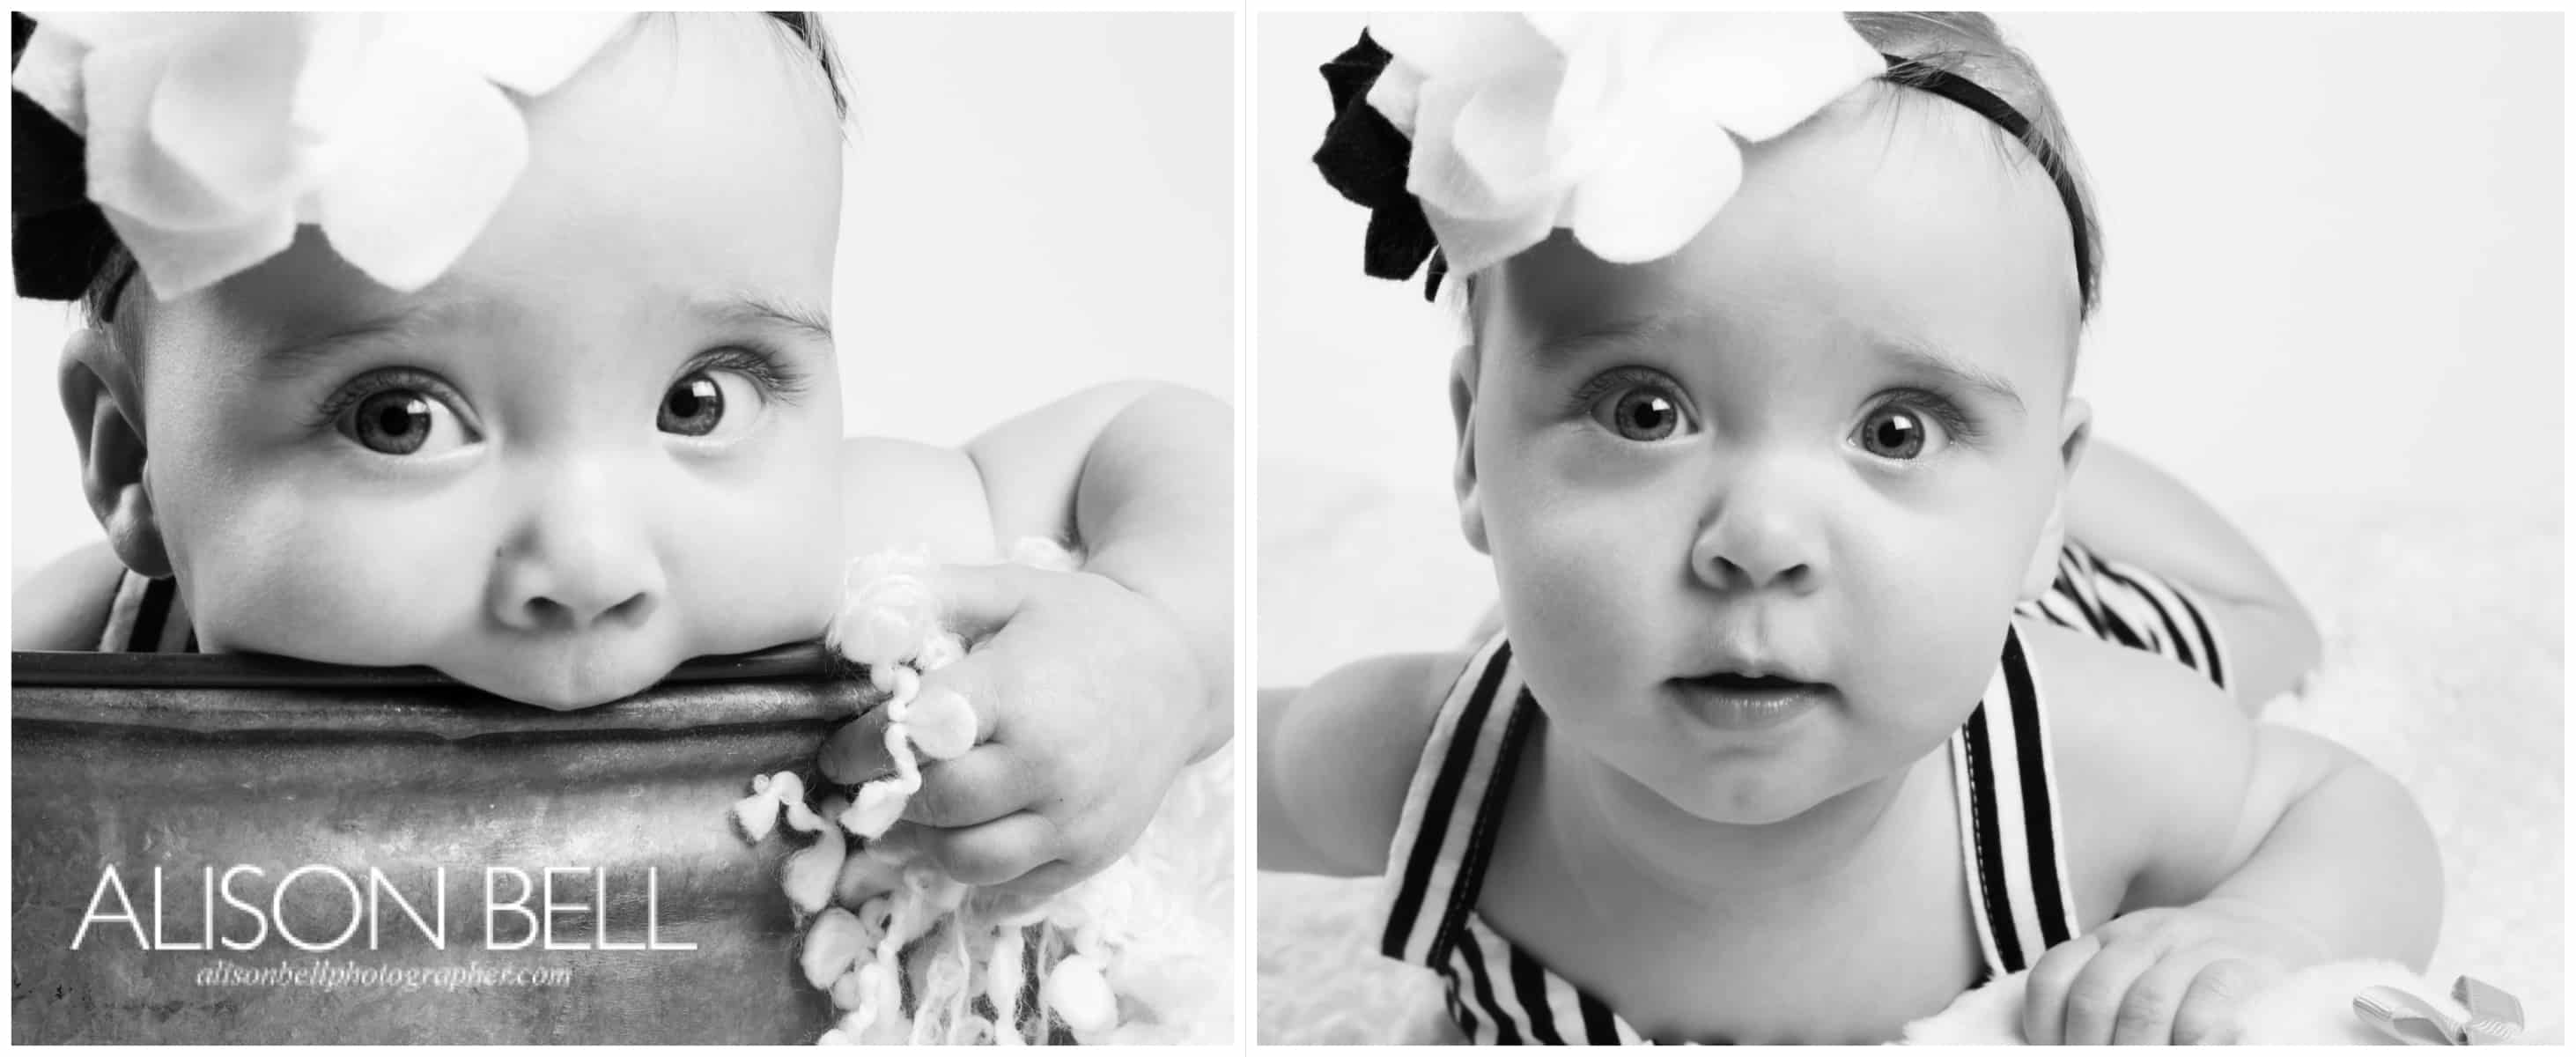 Alison Bell Photographer | Baby & Child Photographer